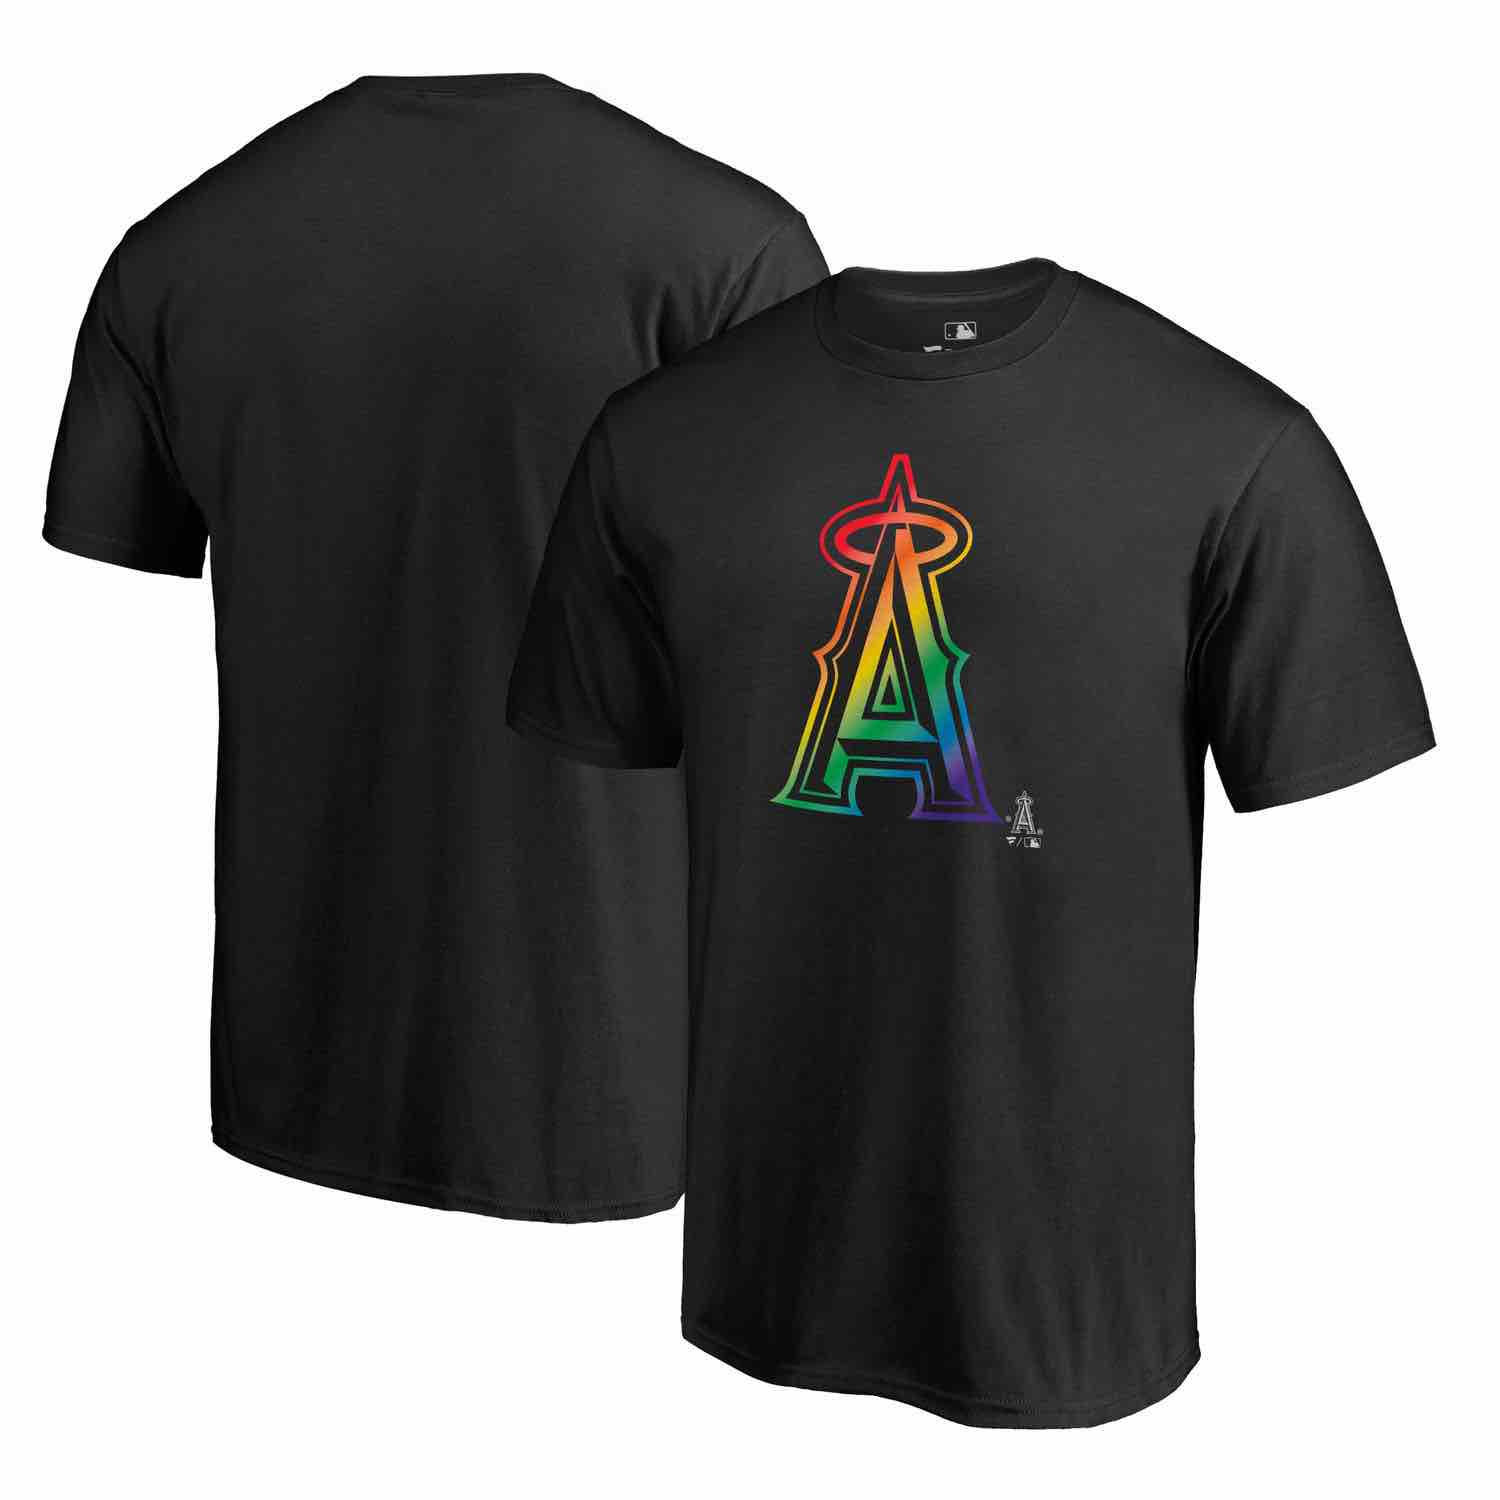 Mens Los Angeles Angels of Anaheim Fanatics Branded Pride Black T-Shirt